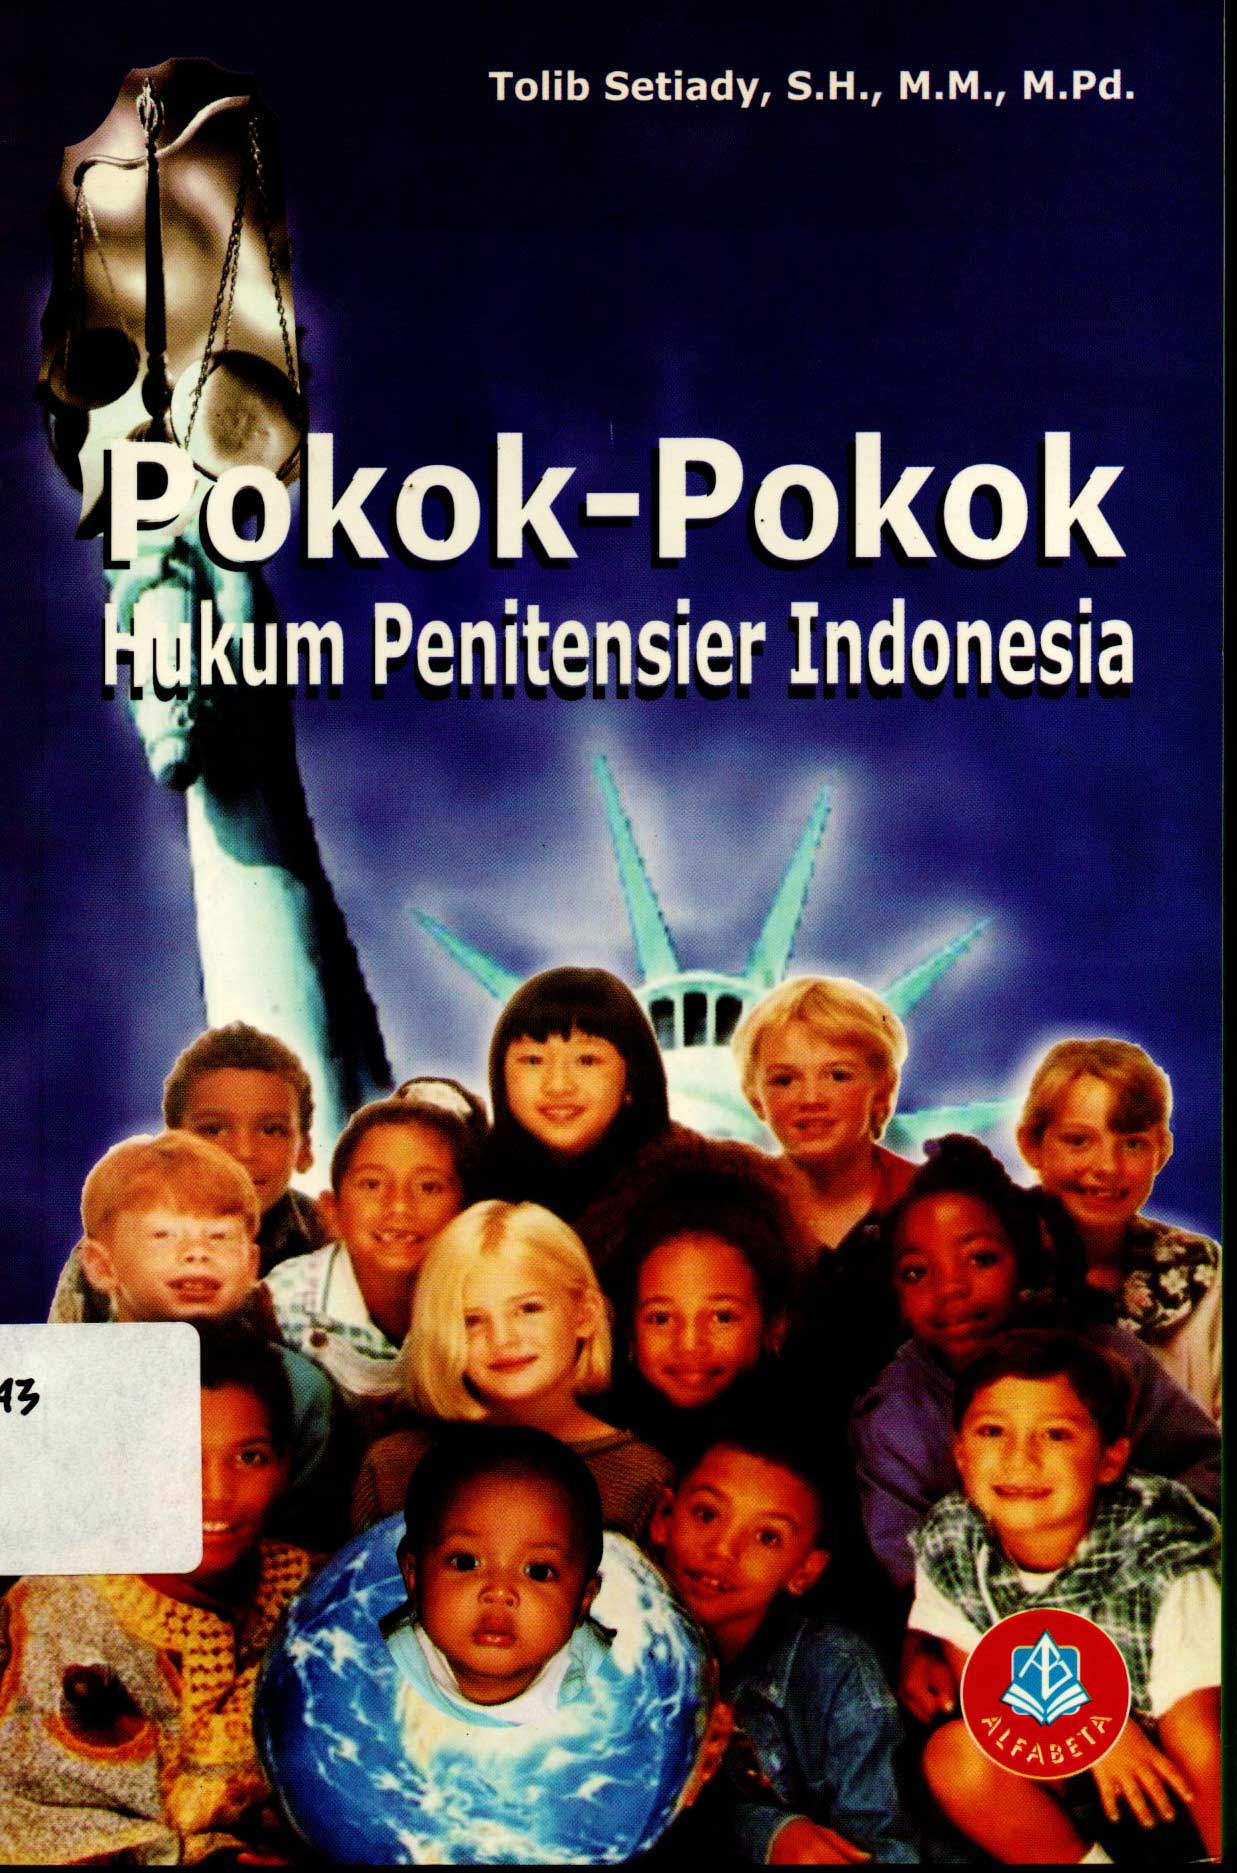 Pokok-pokok Hukum penitensier Indonesia